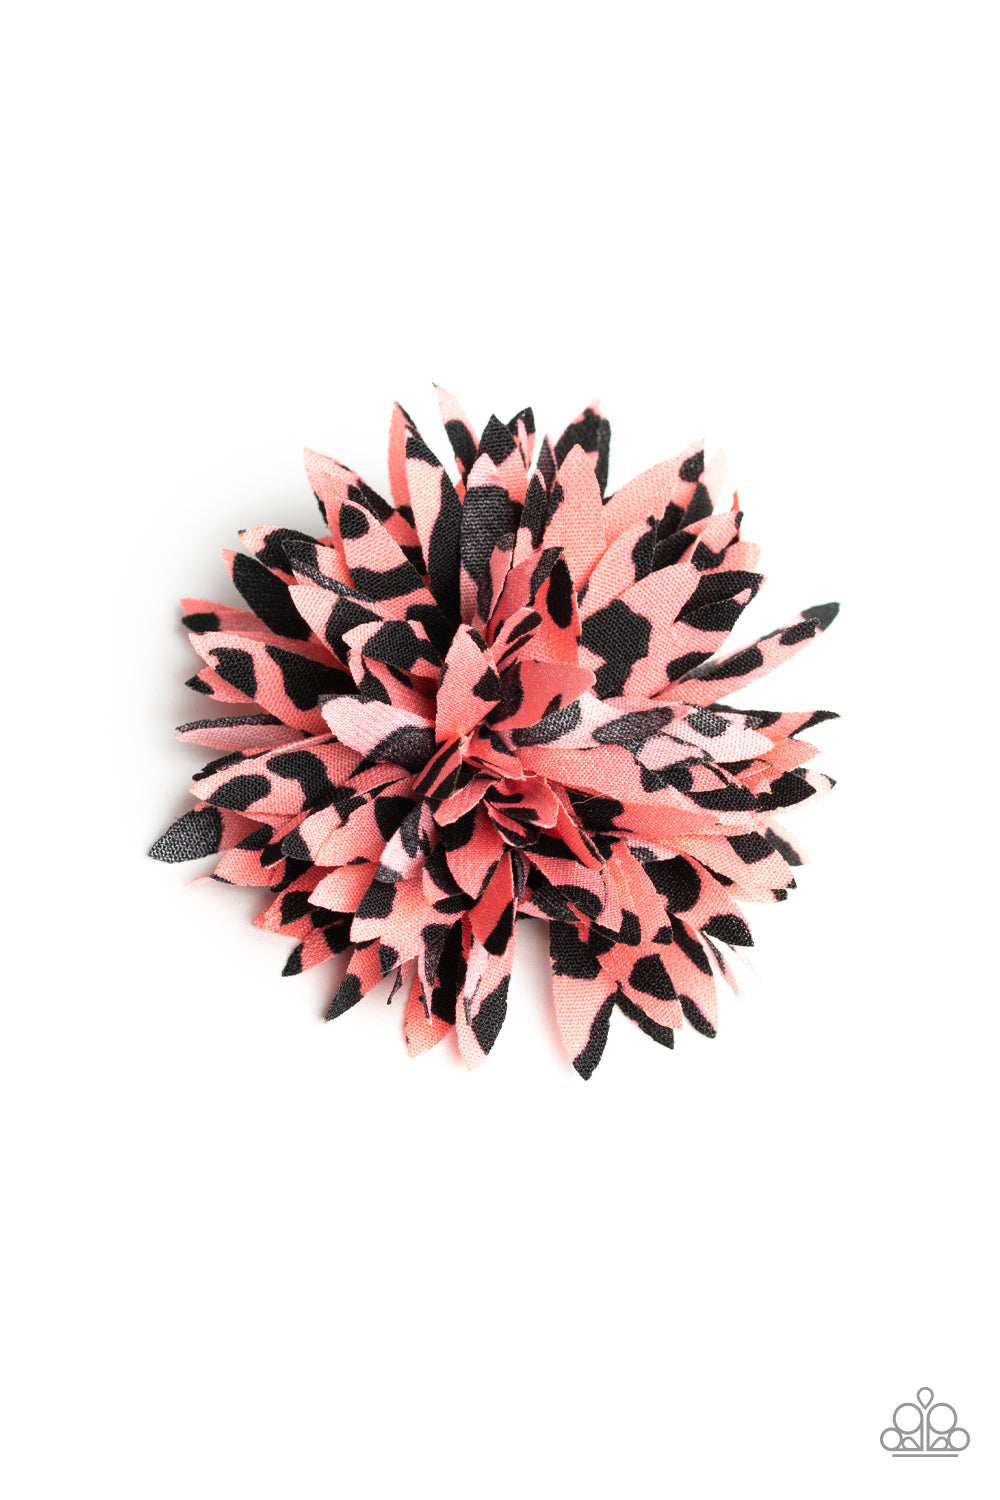 Splattered Splendor Pink/Black Hair Clip - Paparazzi Accessories